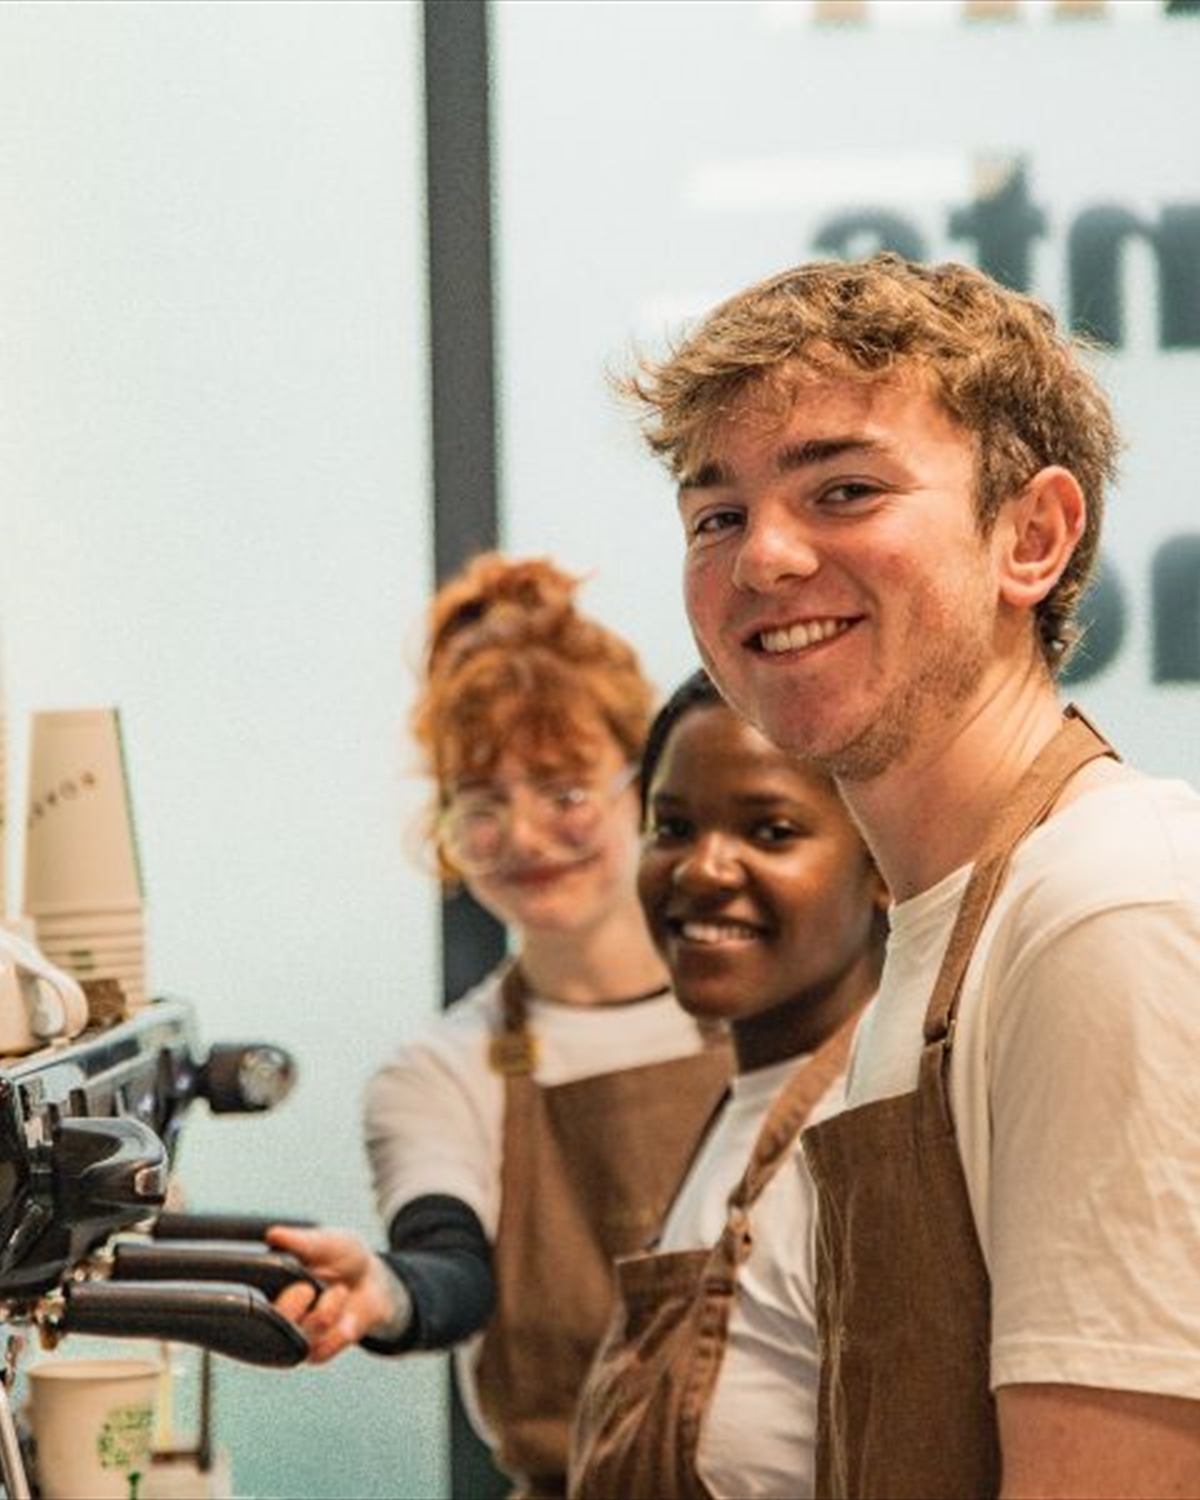 Three Roasters staff members beside coffee machine smiling at camera